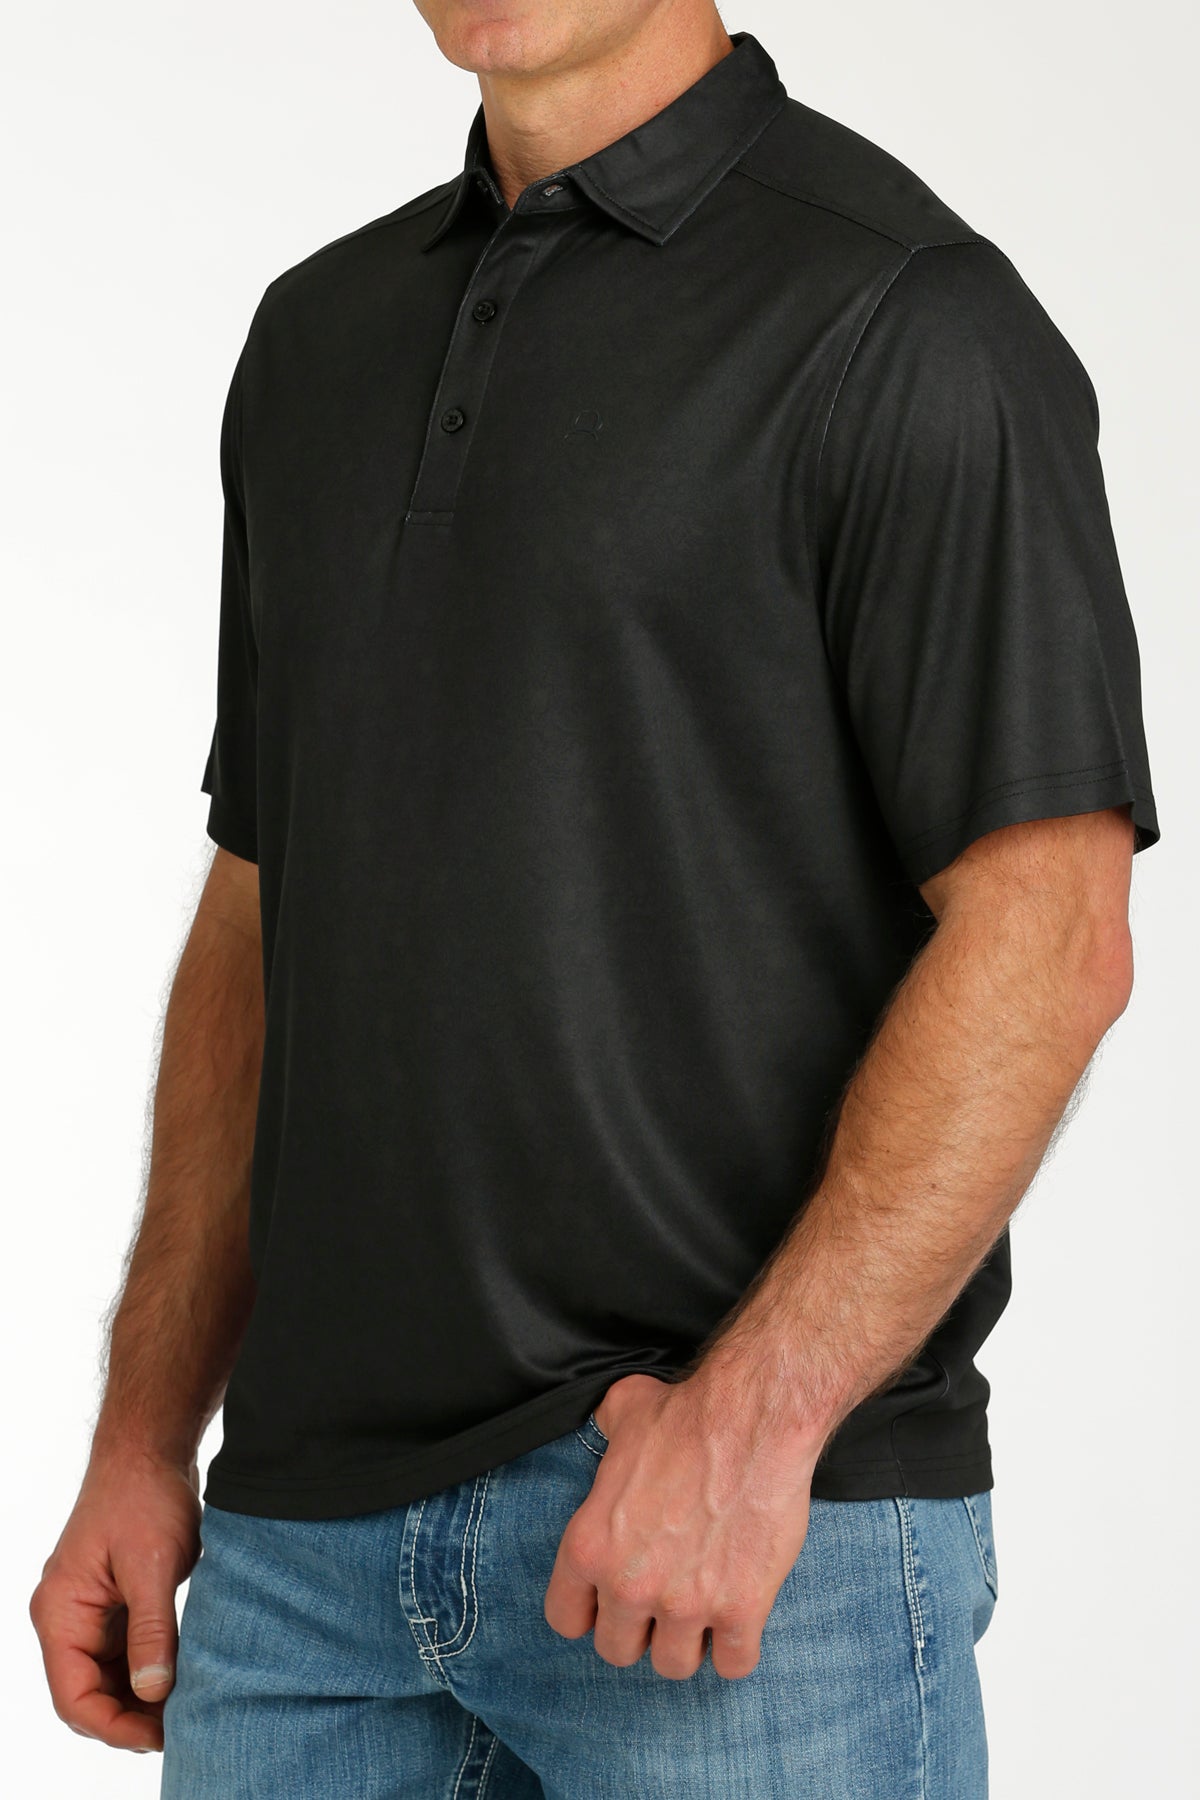 Cinch Men's Arenaflex Short Sleeve Polo in Black